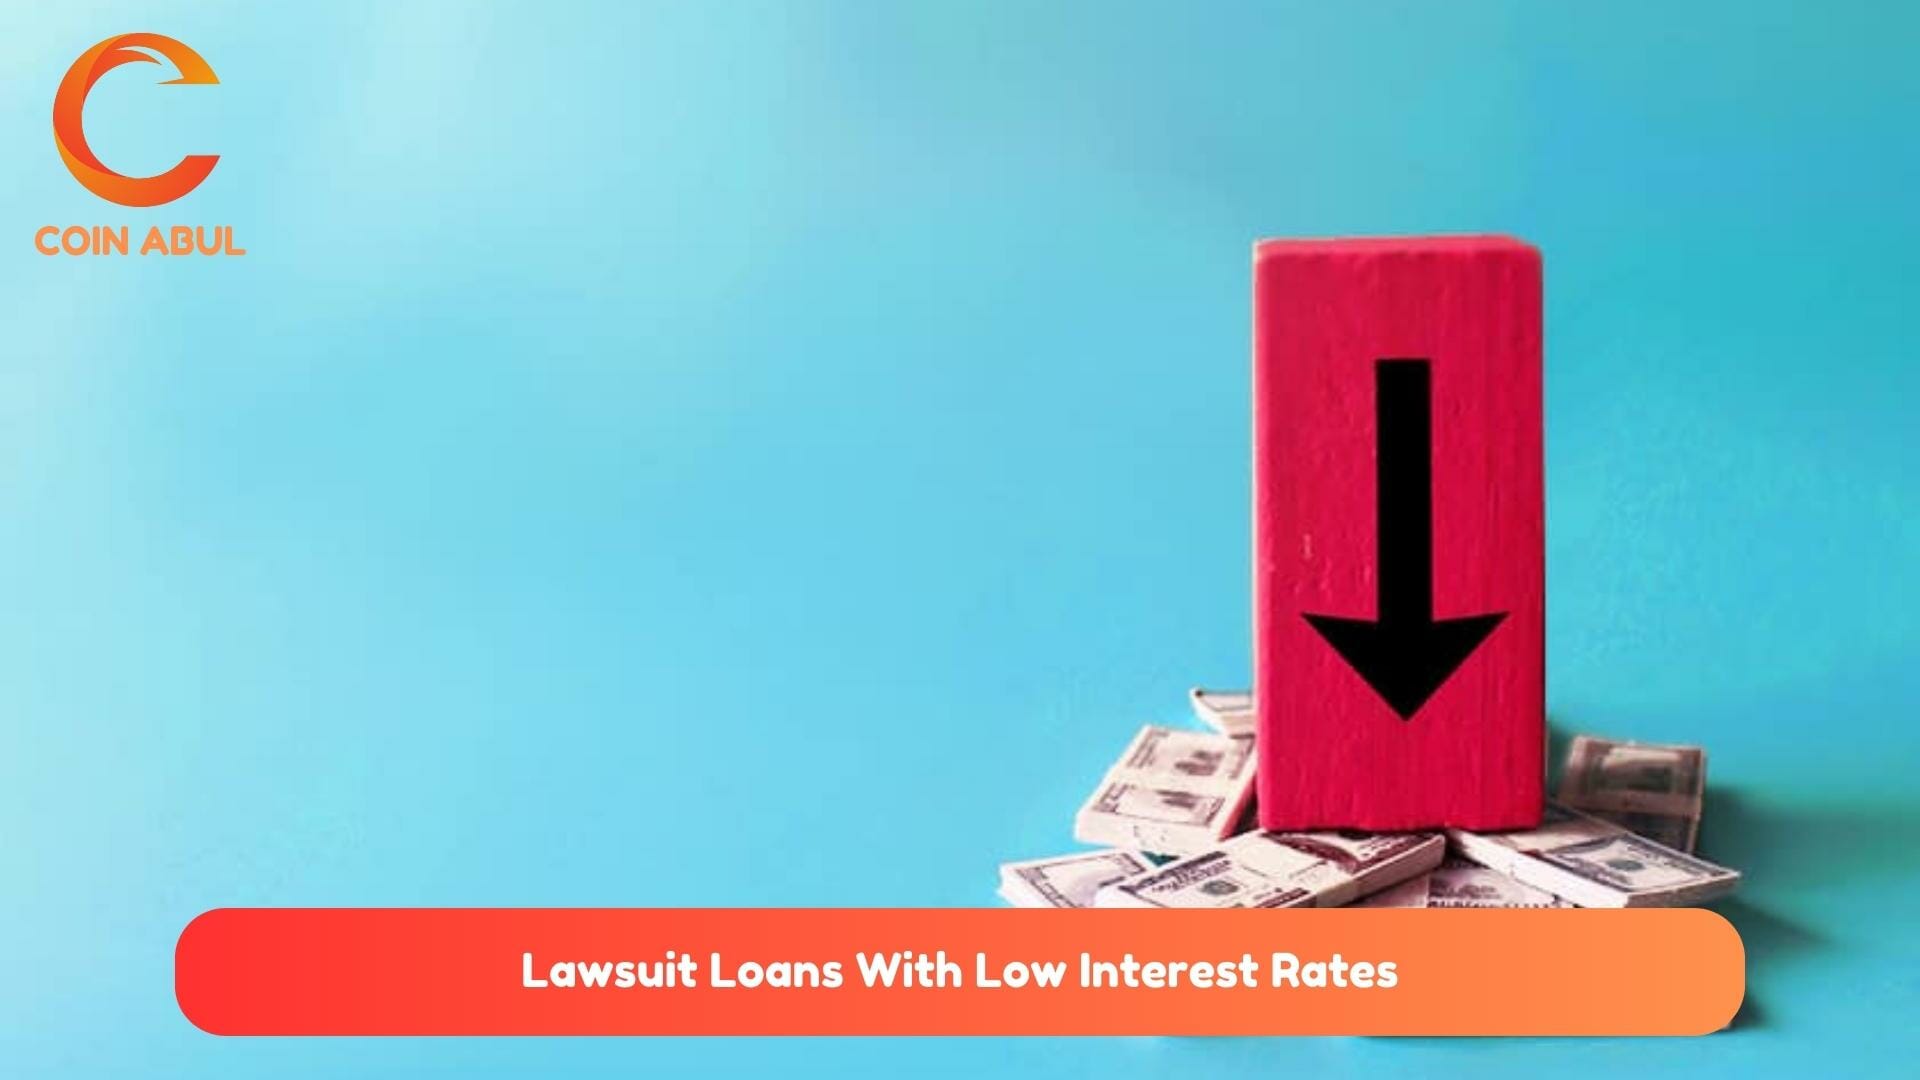 Lawsuit Loans With Low Interest Rates